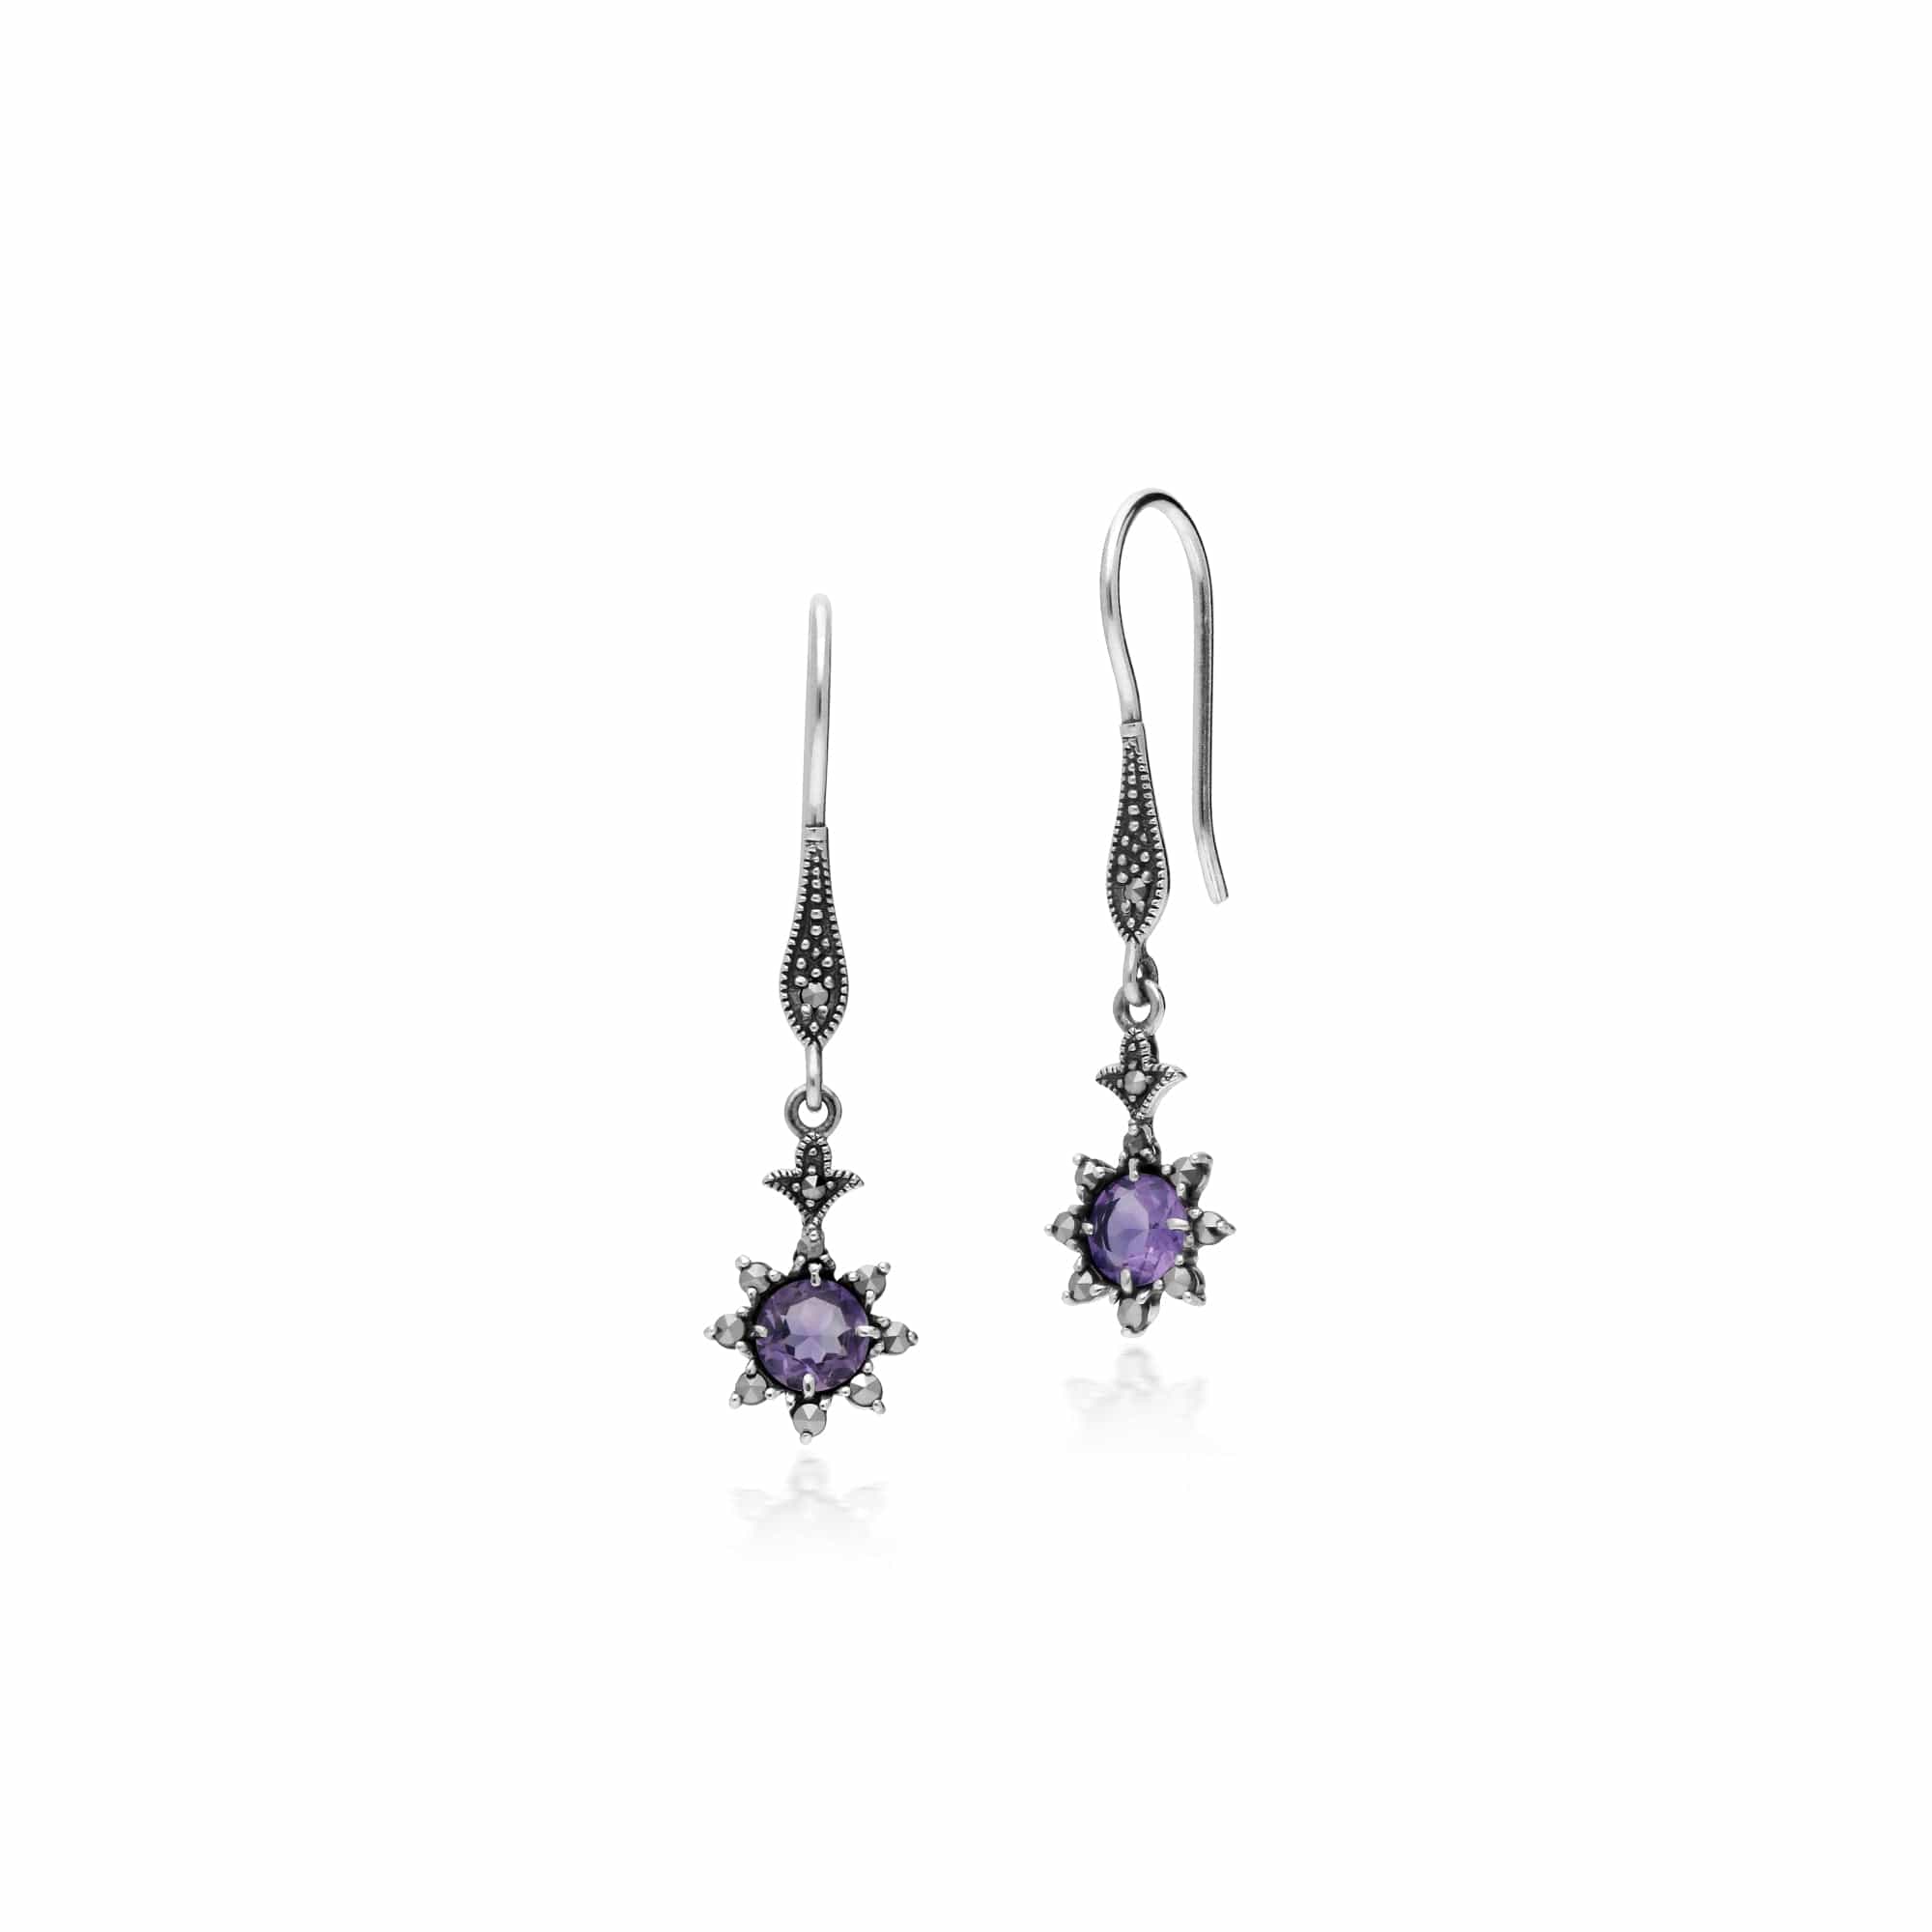 Floral Round Amethyst & Marcasite Drop Earrings in 925 Sterling Silver - Gemondo